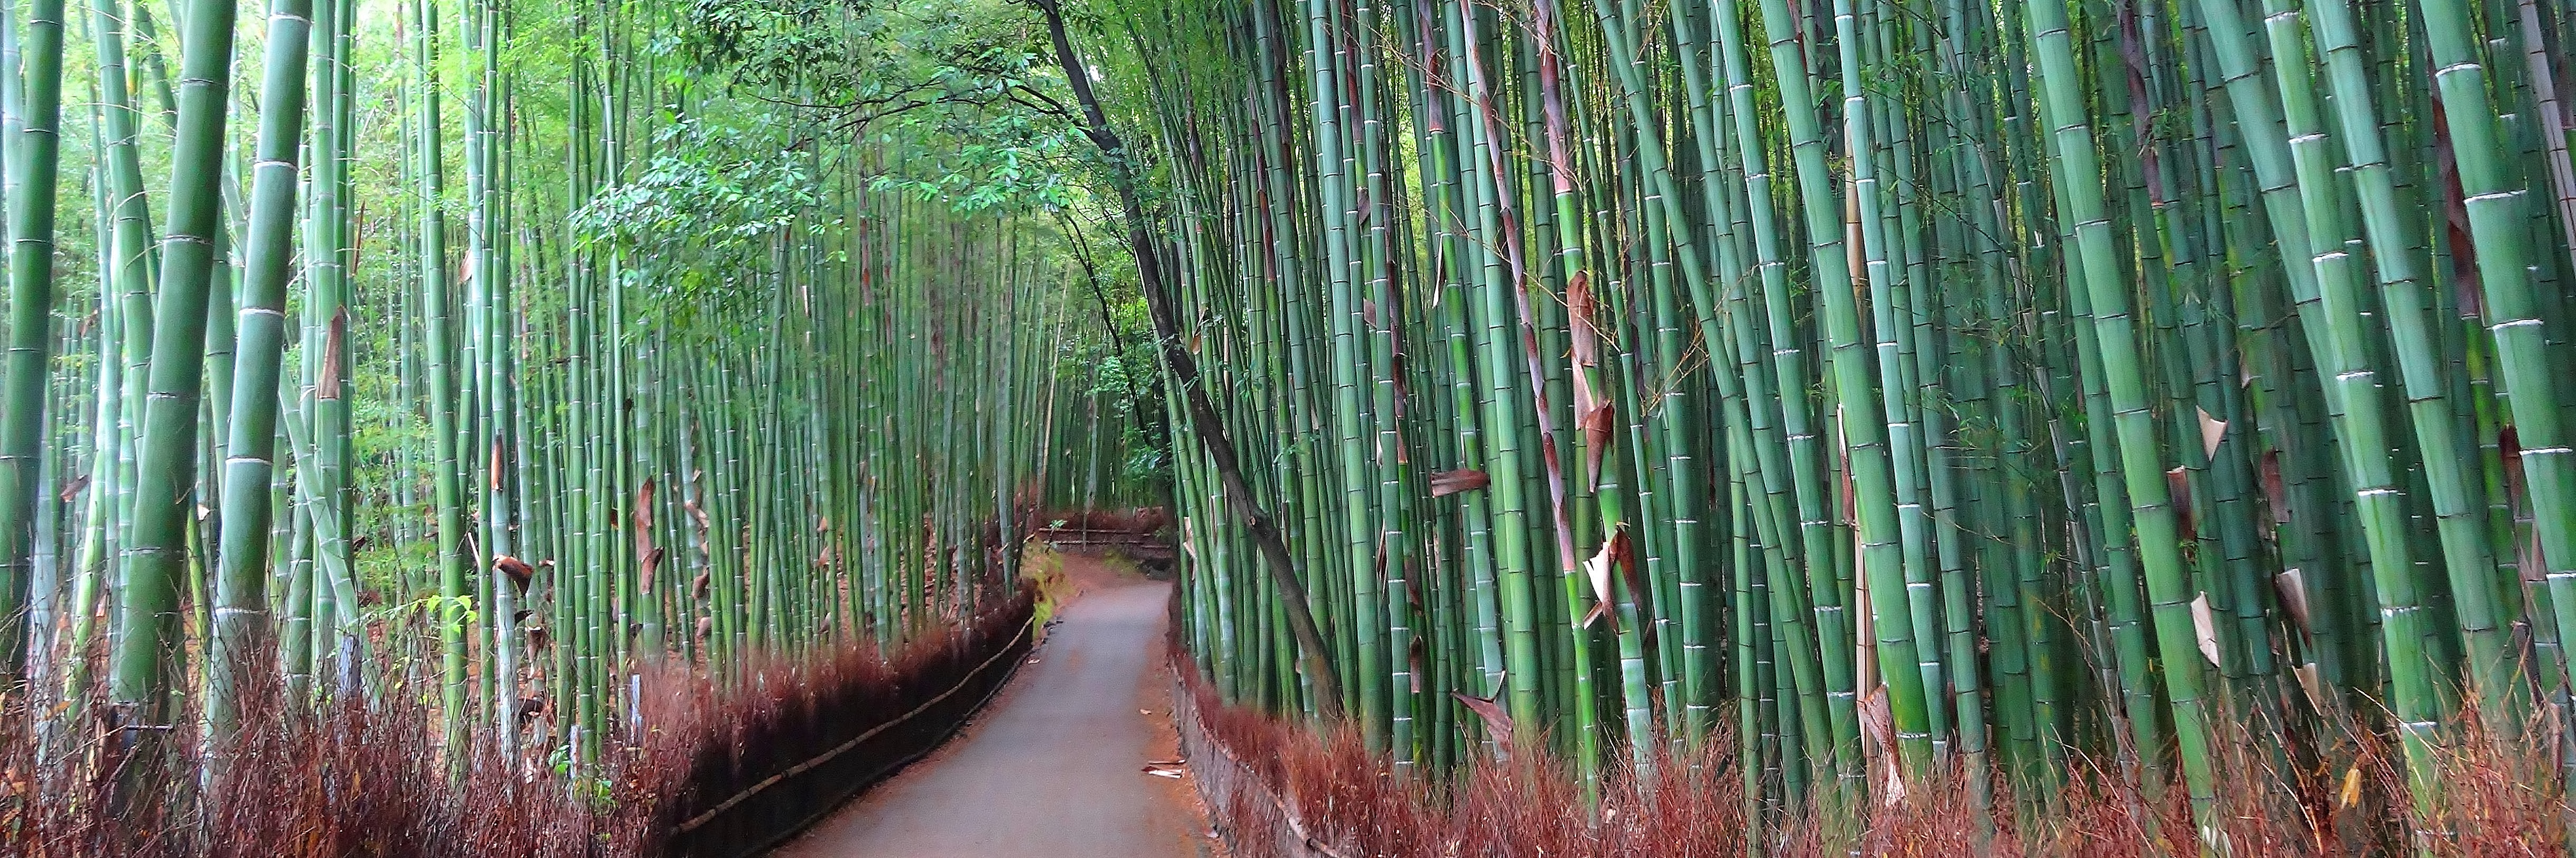 kyoto bamboo grove japan